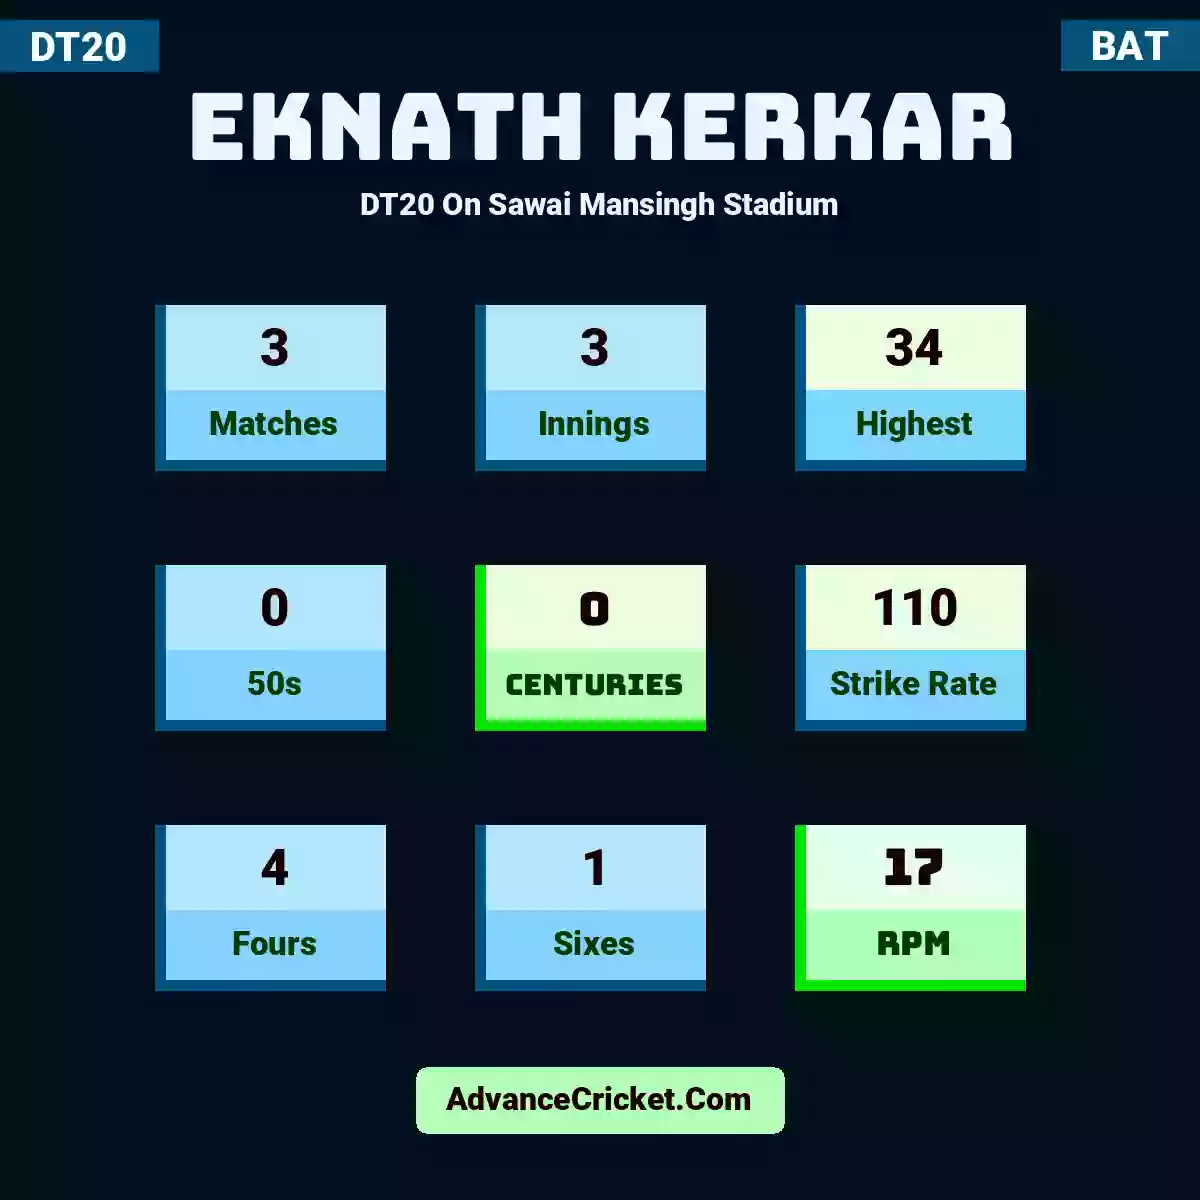 Eknath Kerkar DT20  On Sawai Mansingh Stadium, Eknath Kerkar played 3 matches, scored 34 runs as highest, 0 half-centuries, and 0 centuries, with a strike rate of 110. E.Kerkar hit 4 fours and 1 sixes, with an RPM of 17.